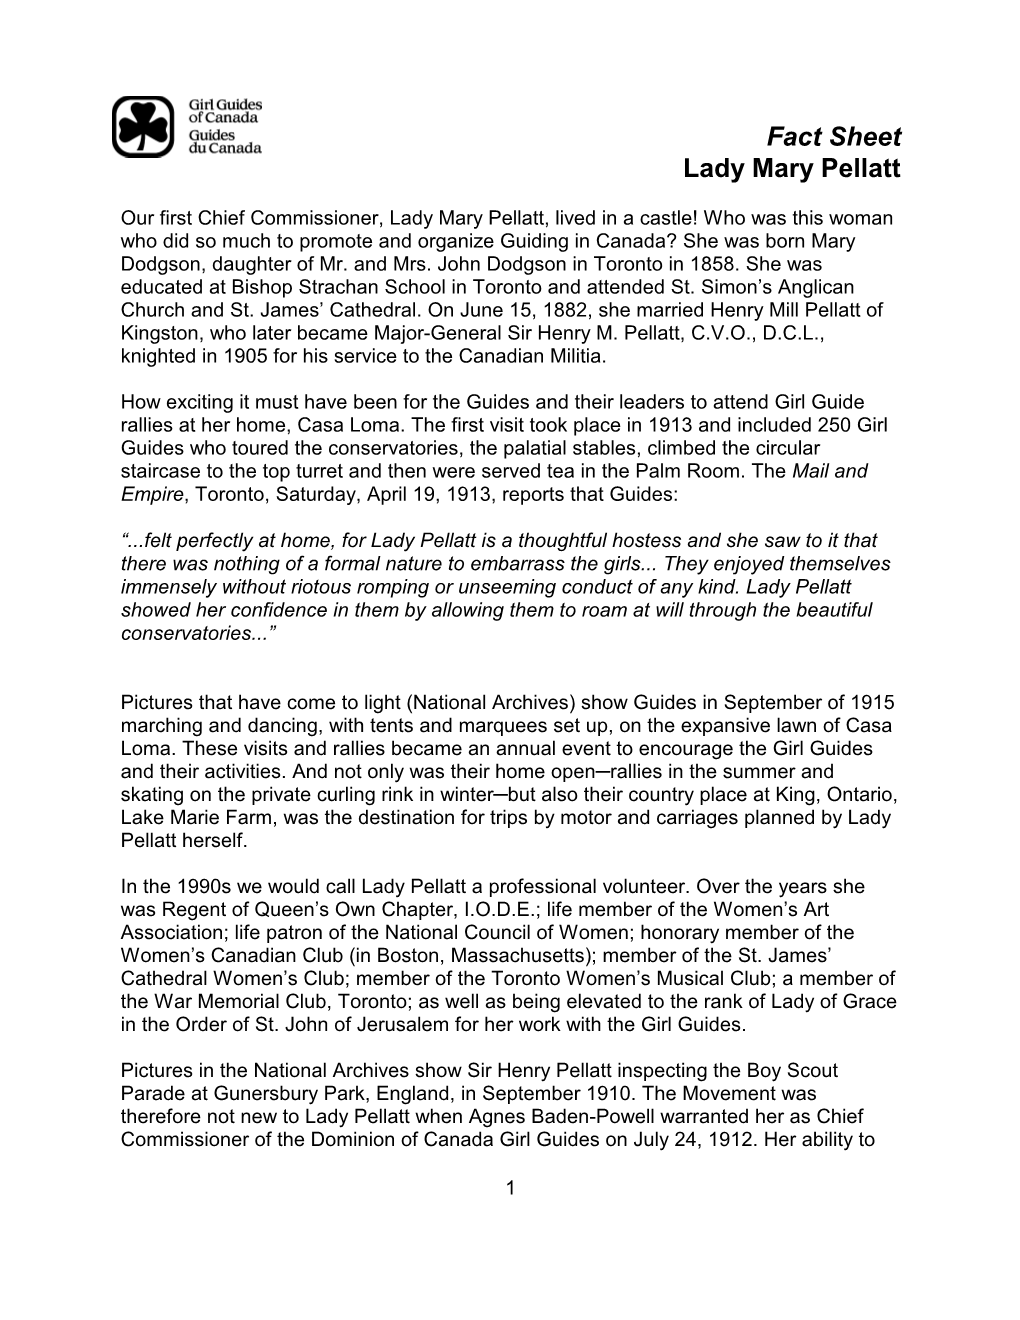 Fact Sheet Lady Mary Pellatt